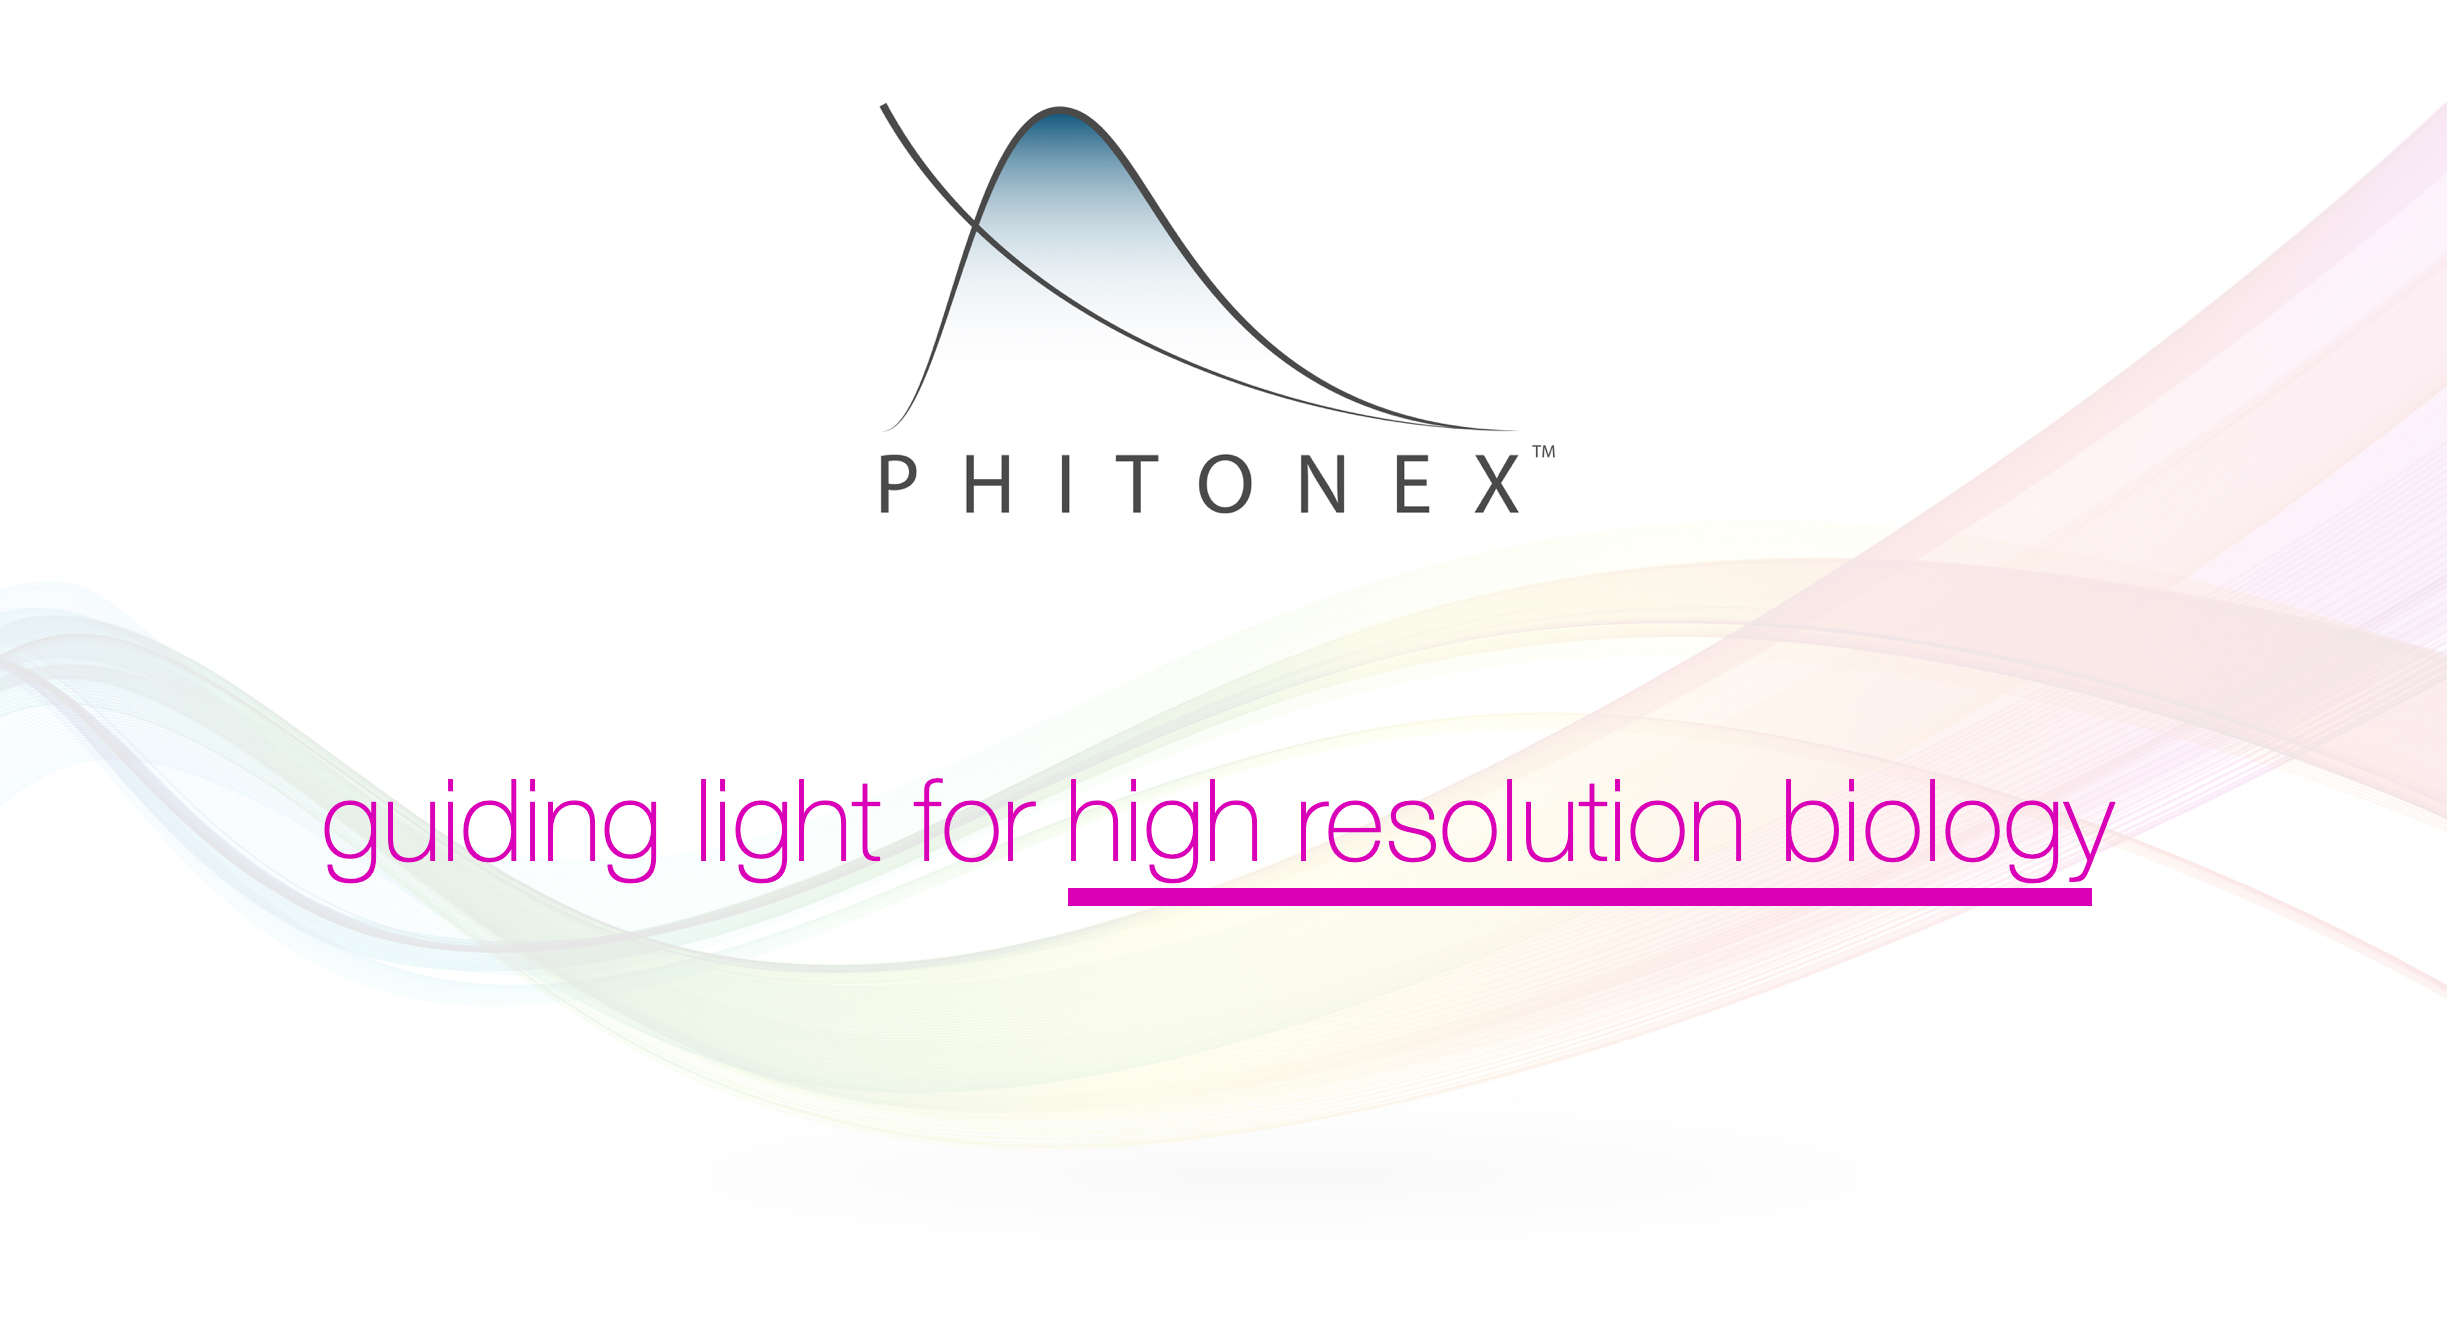 Phitonex logo